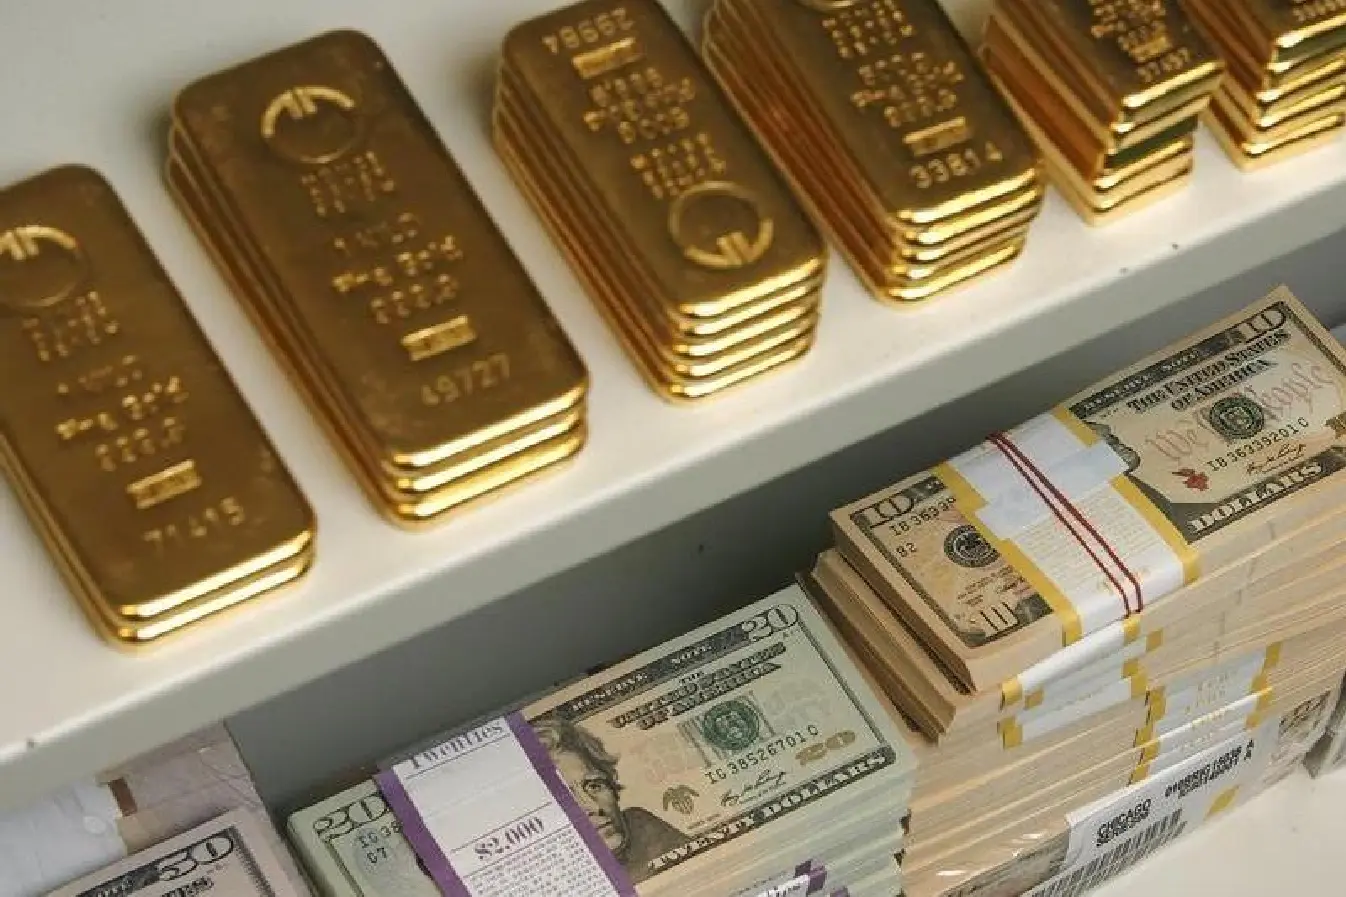 PRECIOUS-Gold firms on softer dollar ahead of Fed symposium